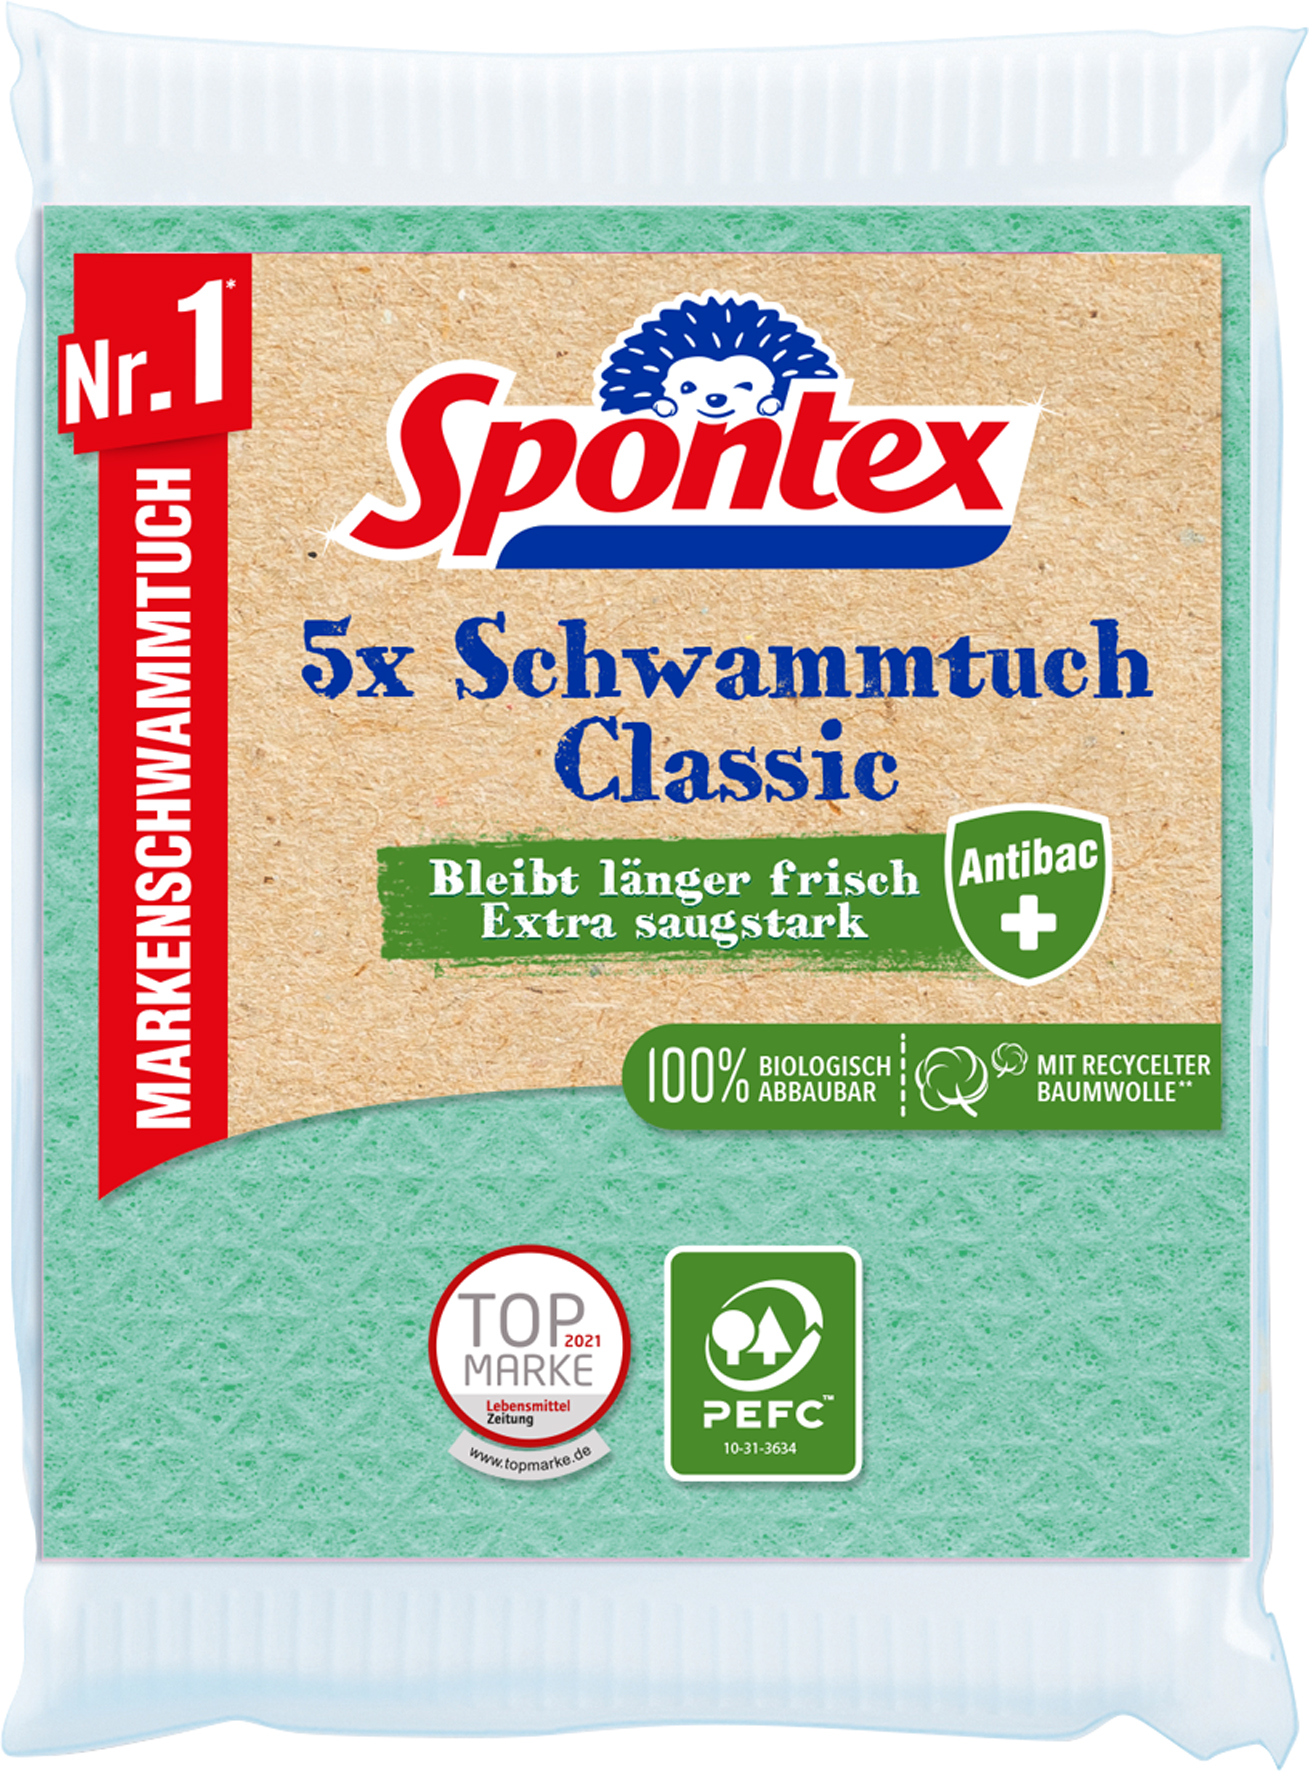 Spontex Schwammtuch Classic Antibac PEFC 5er Pack